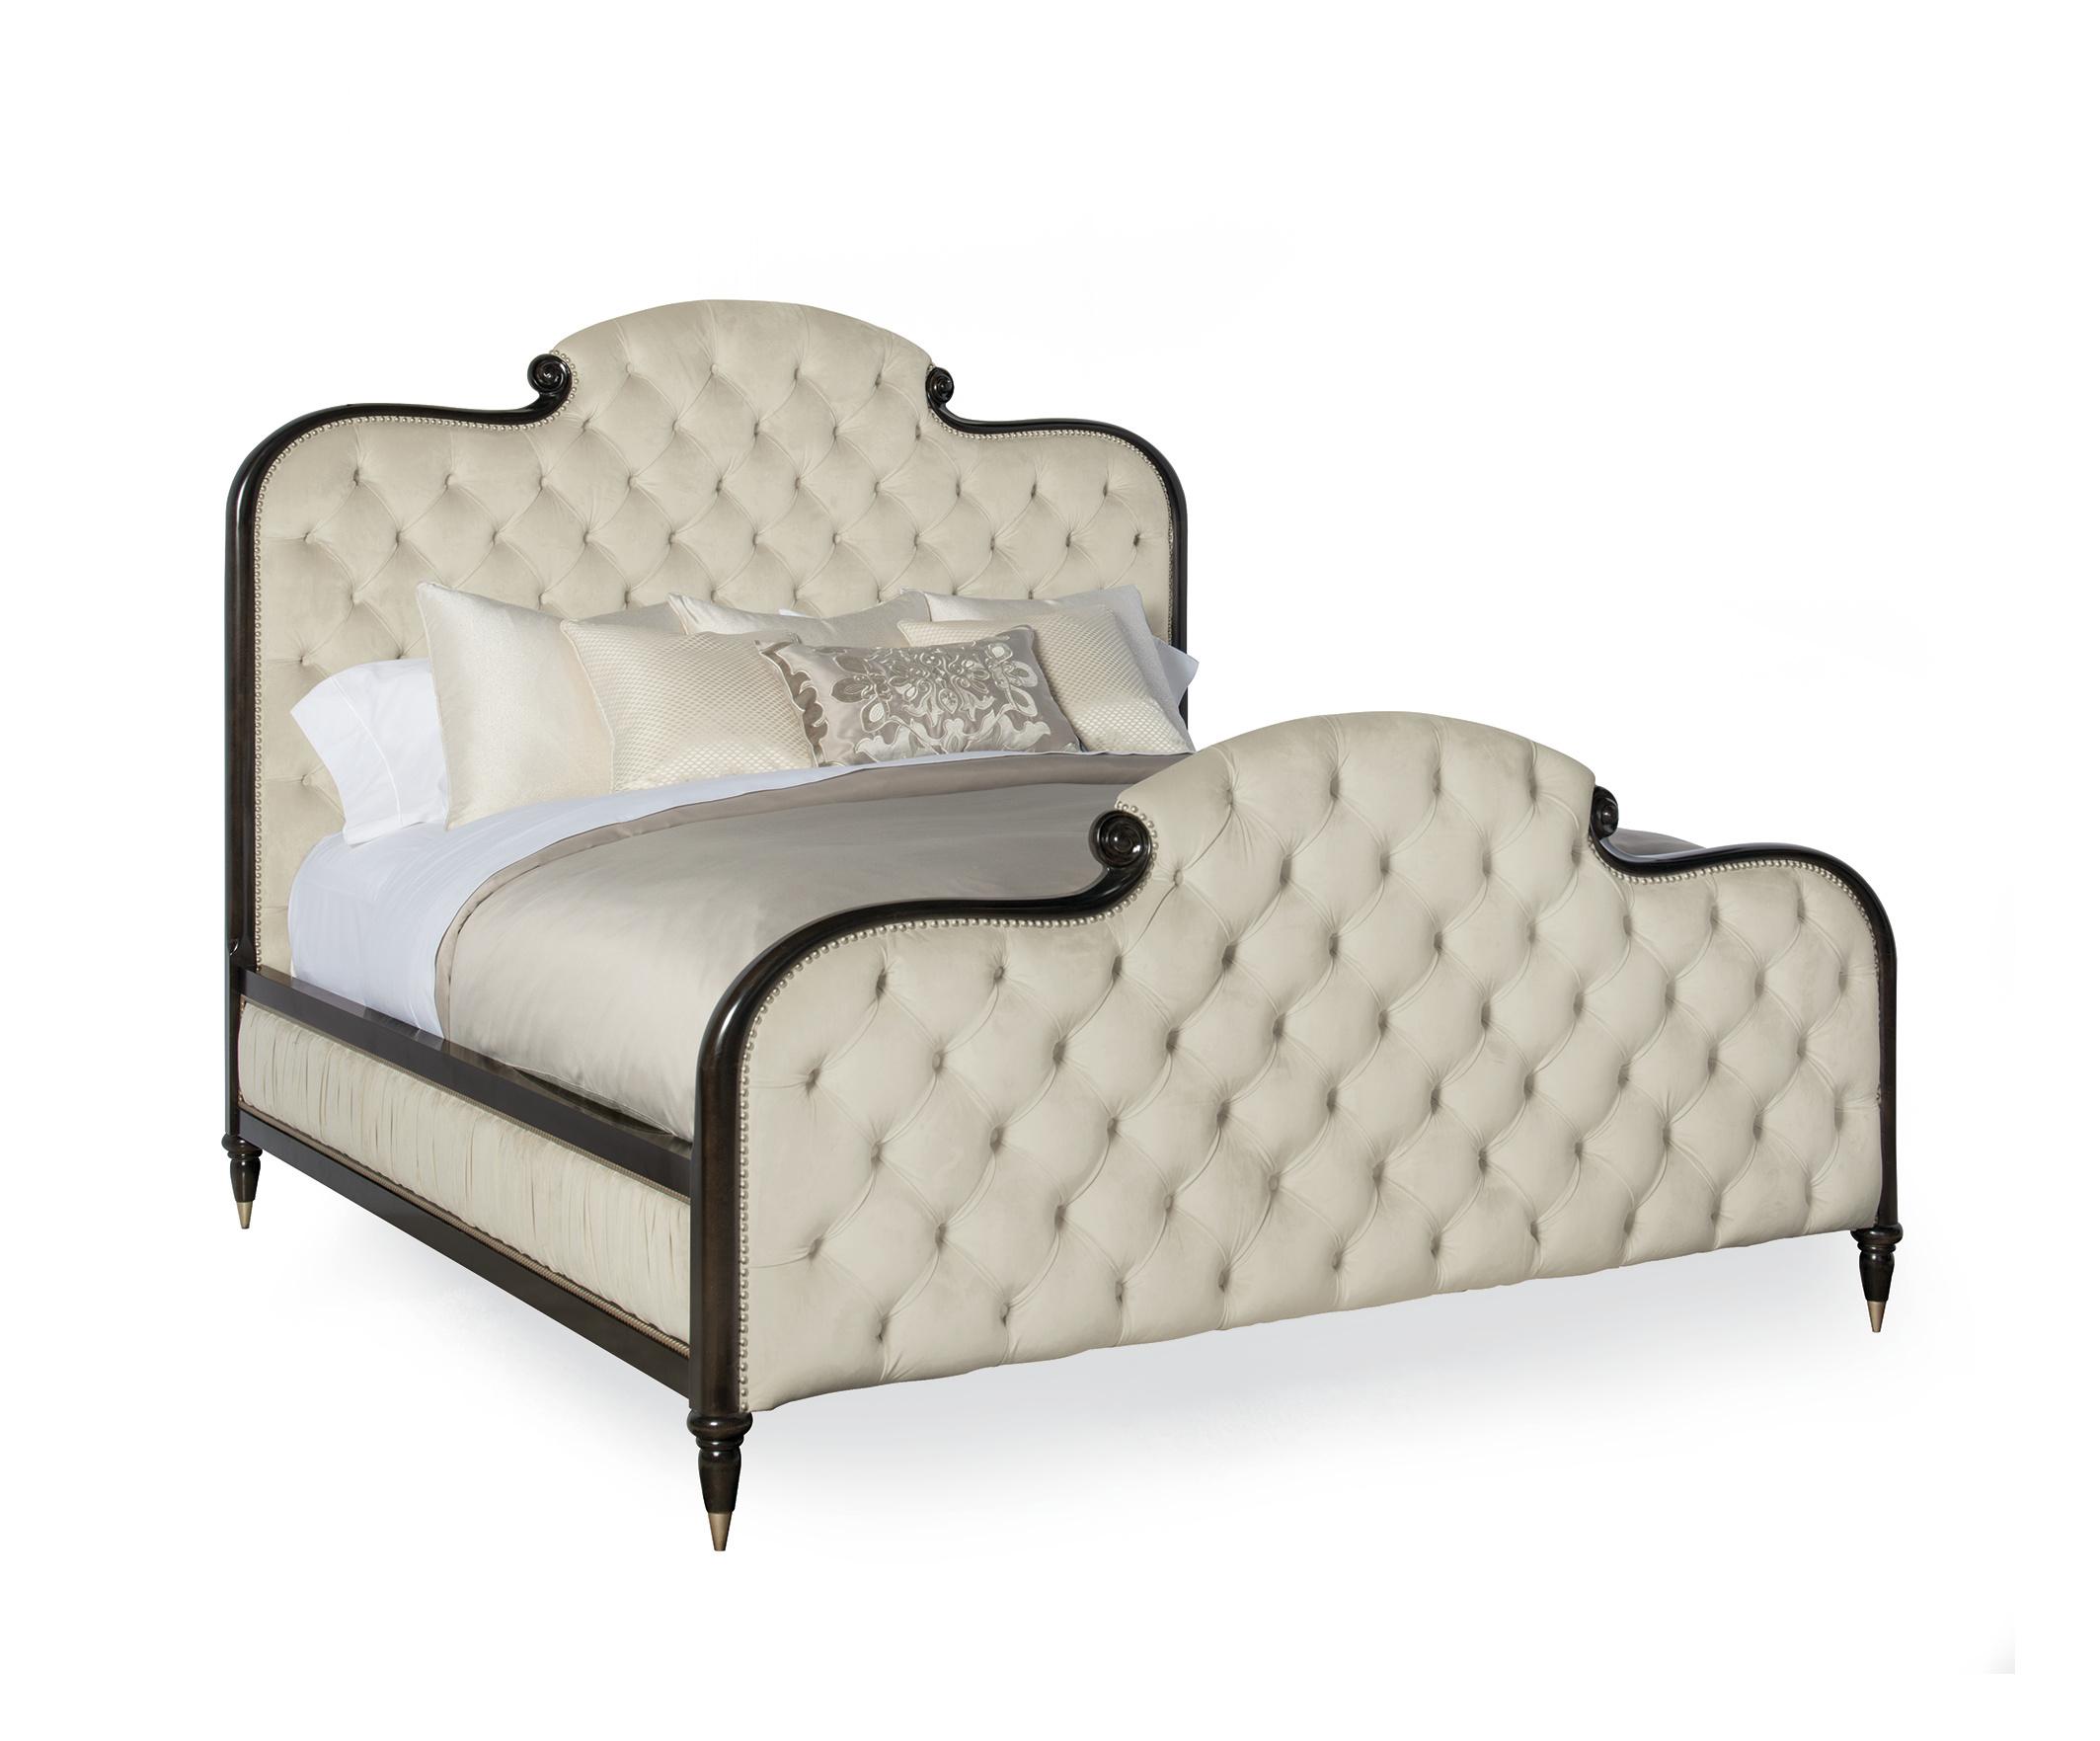 Contemporary Platform Bed EVERLY B093-352 in Cream, Ebony Fabric